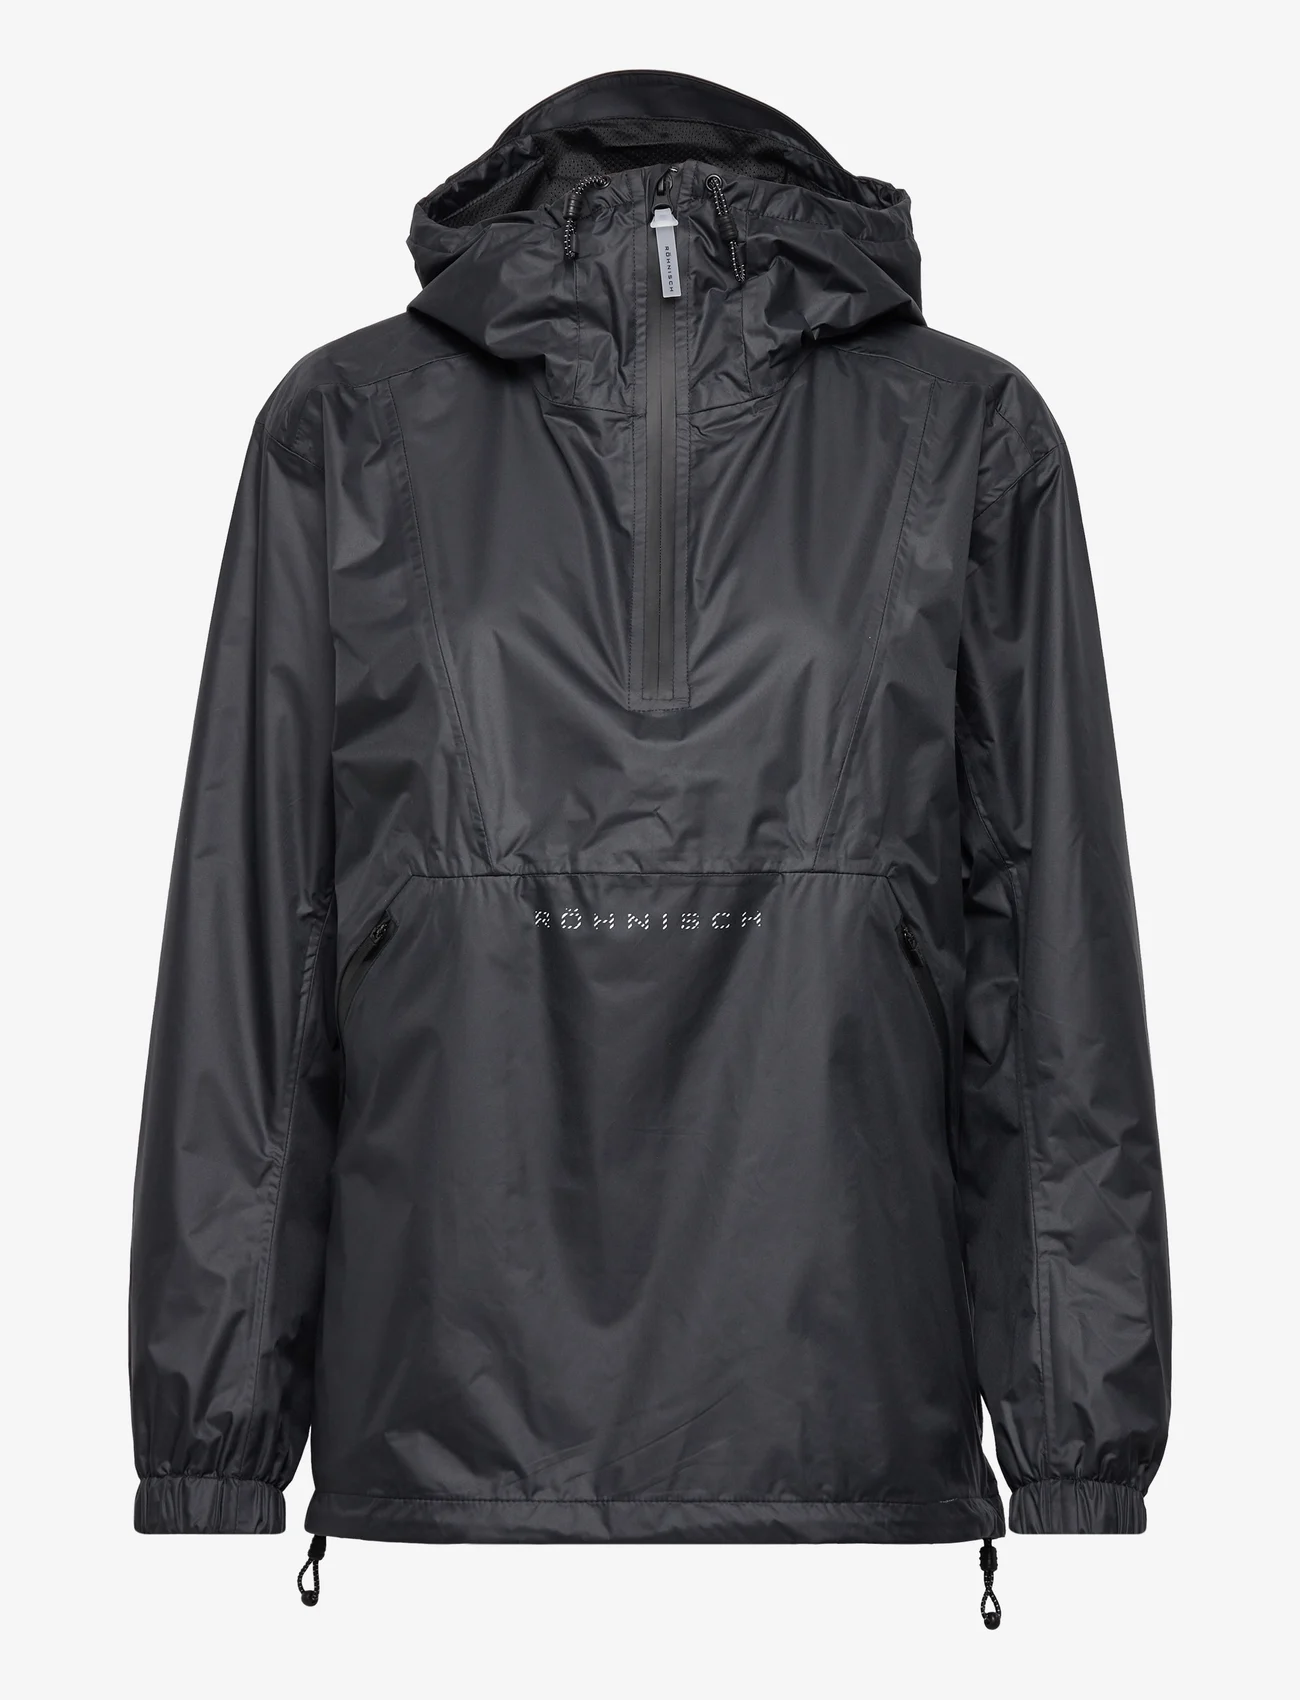 Röhnisch - Cliff Rain Jacket - rain coats - black - 0